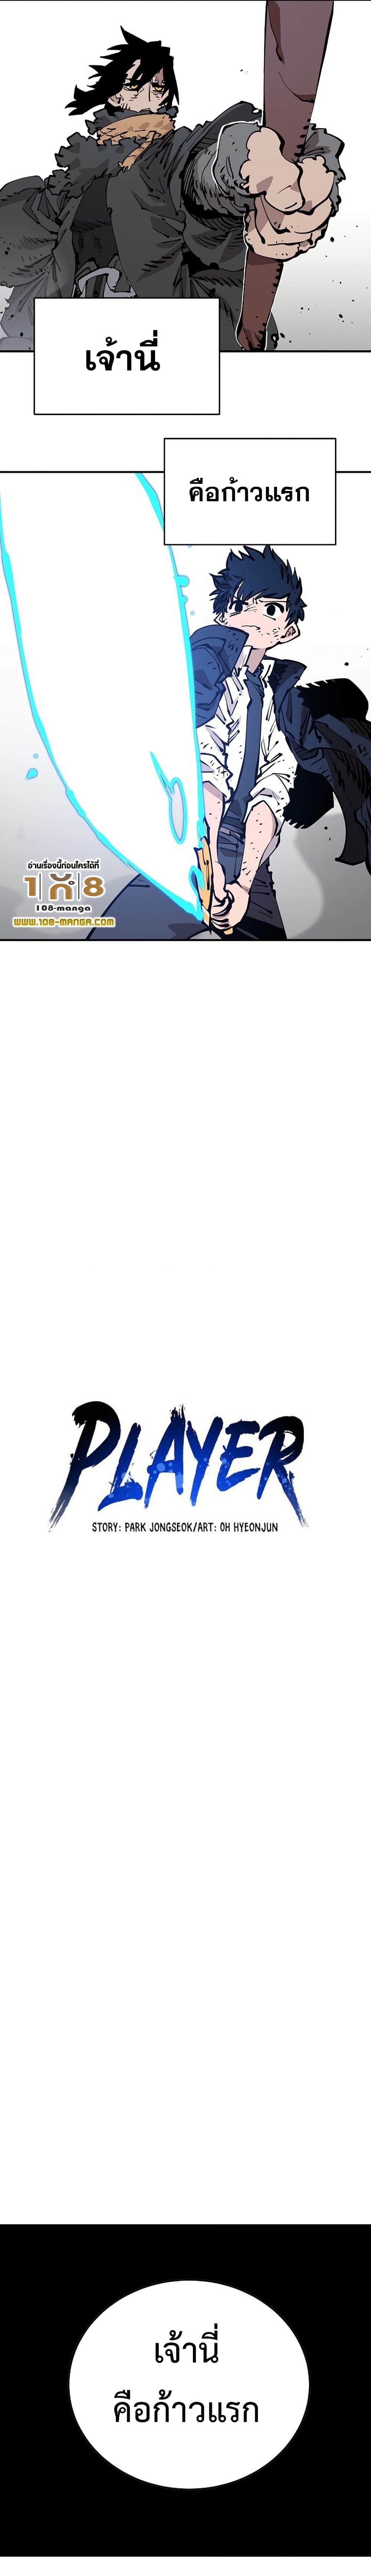 Player84 (10)